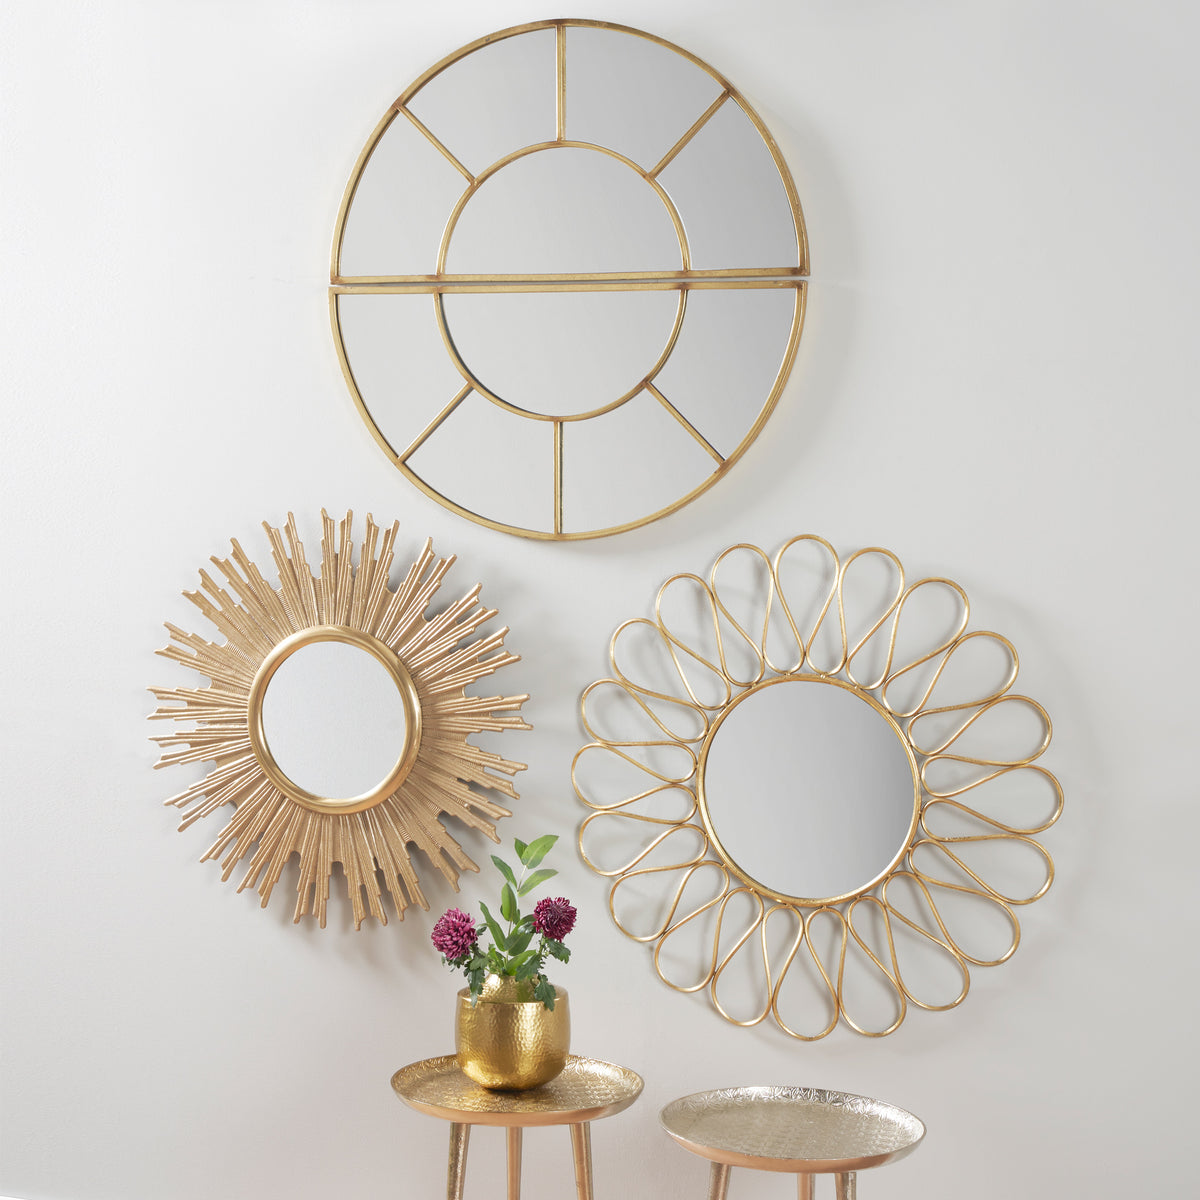 Antique Gold Metal Petal Design Round Wall Mirror